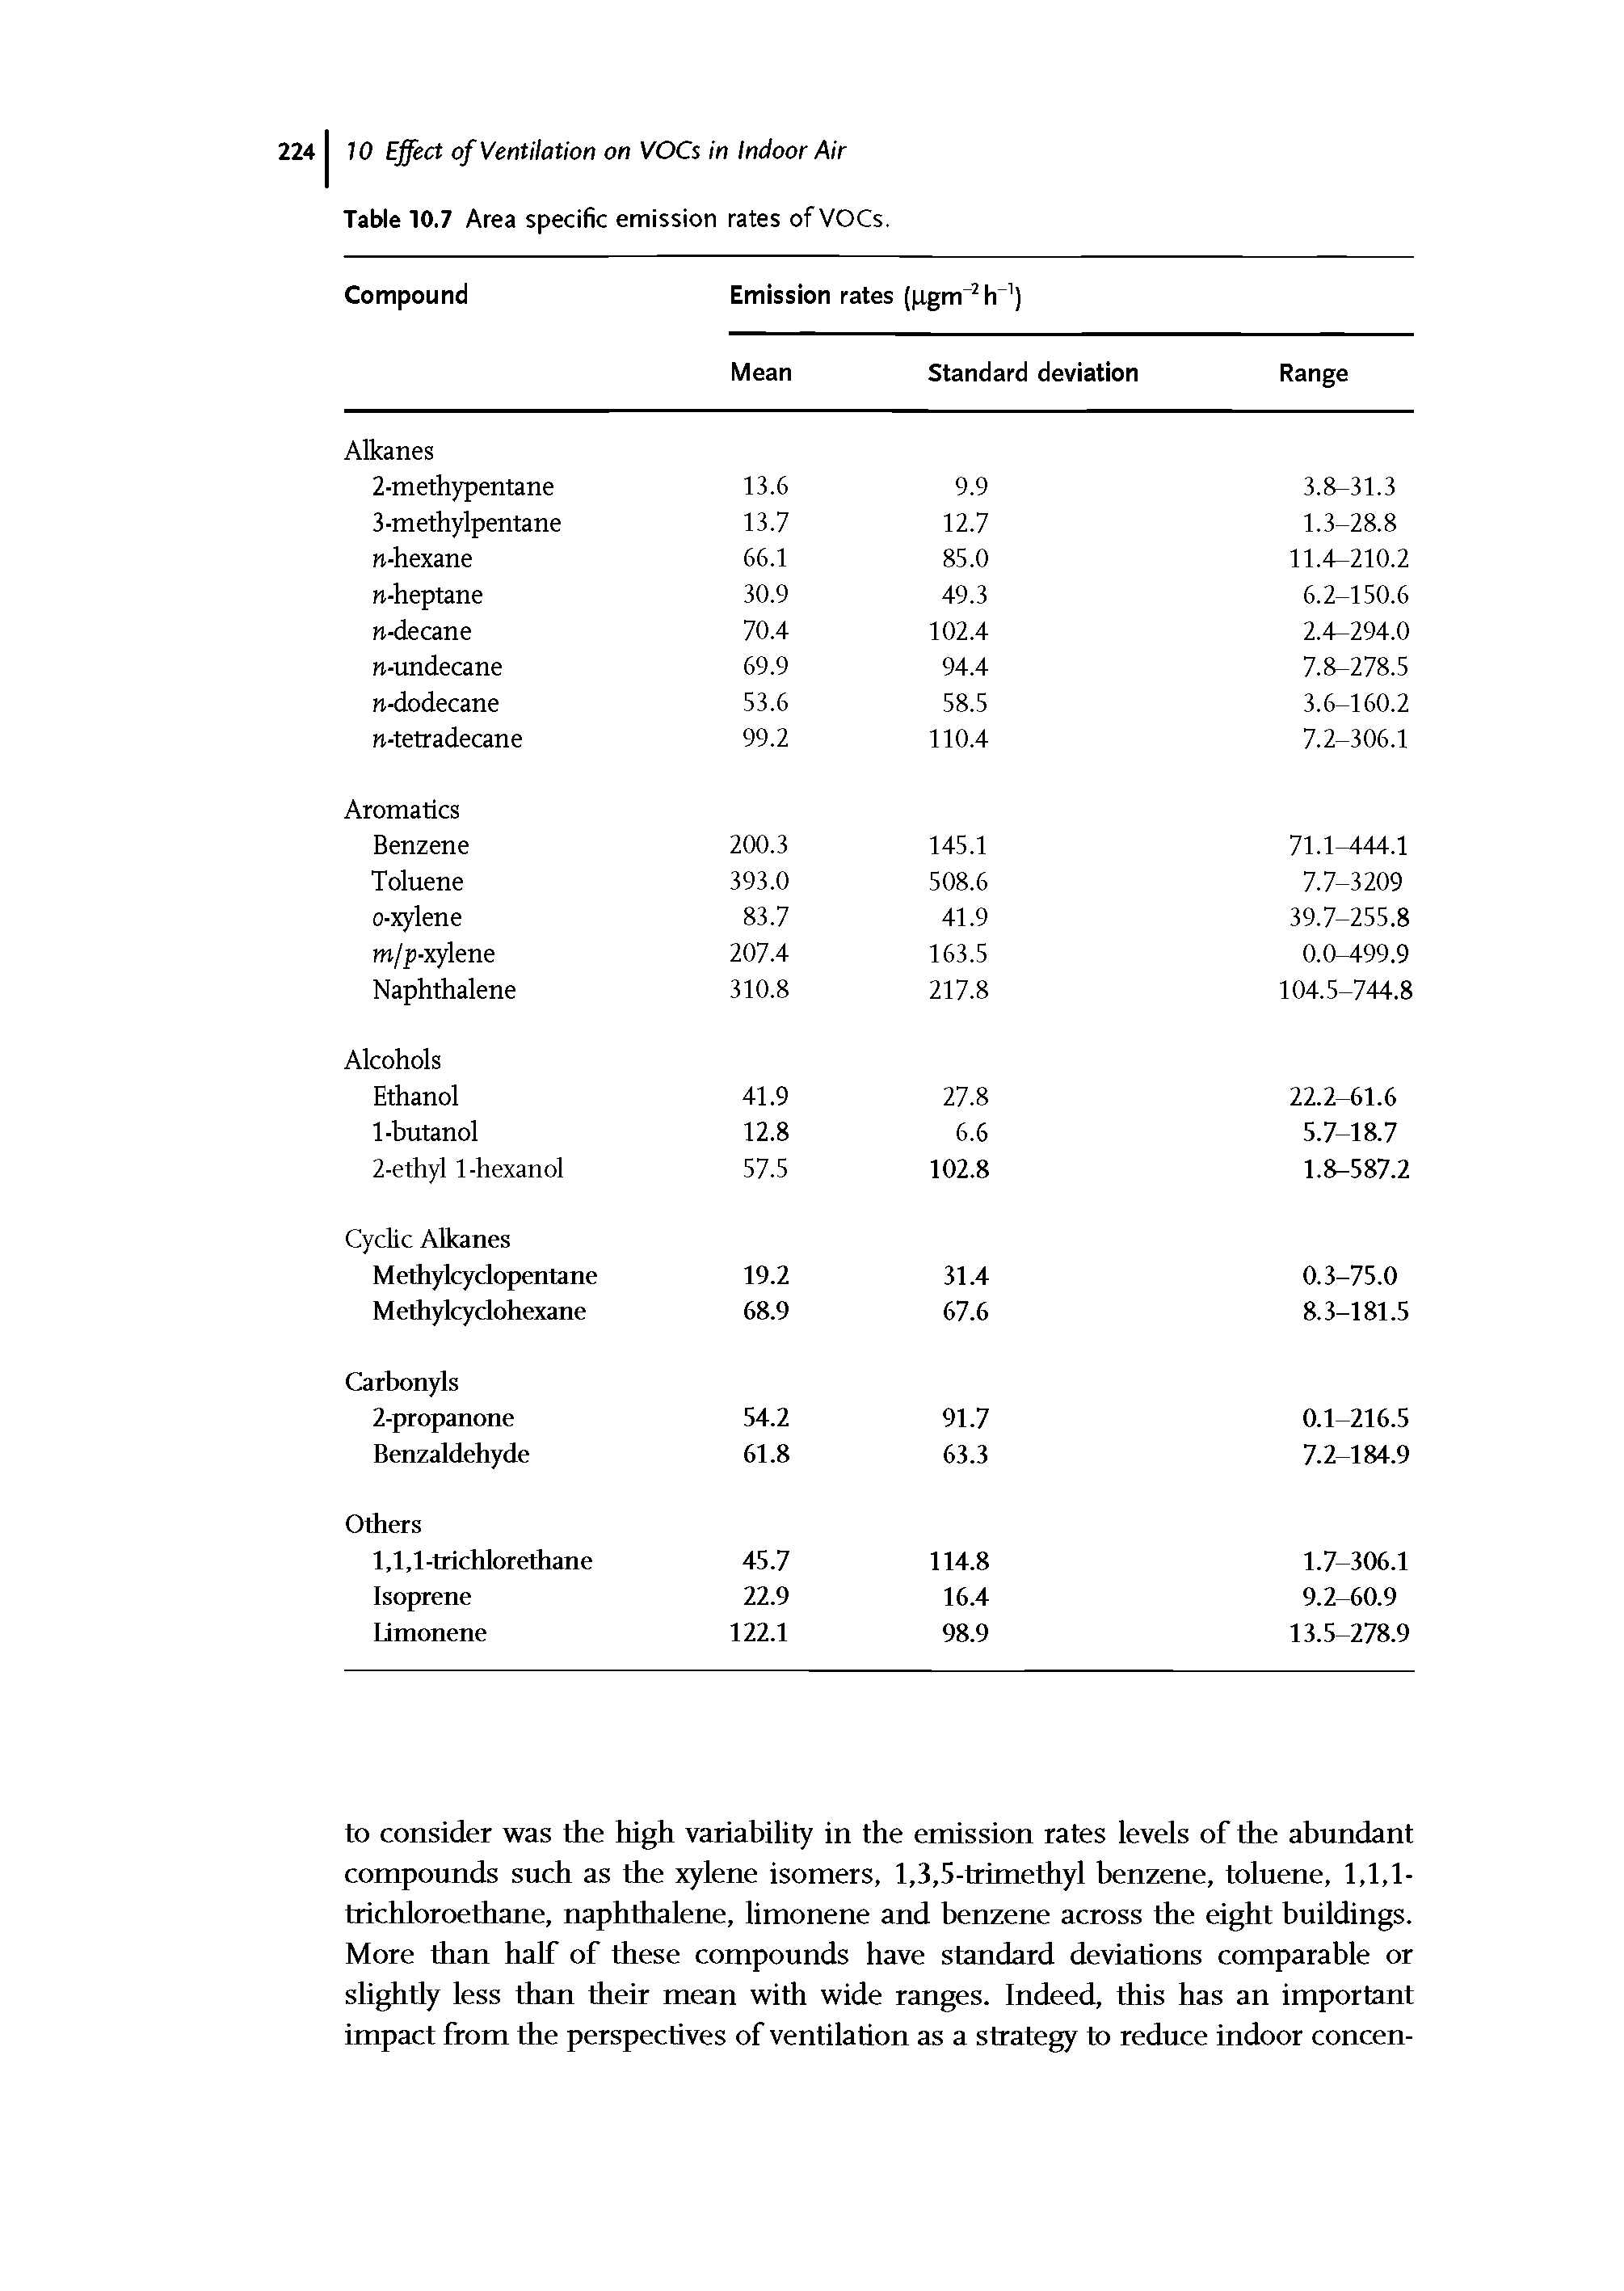 Table 10.7 Area specific emission rates of VOCs.